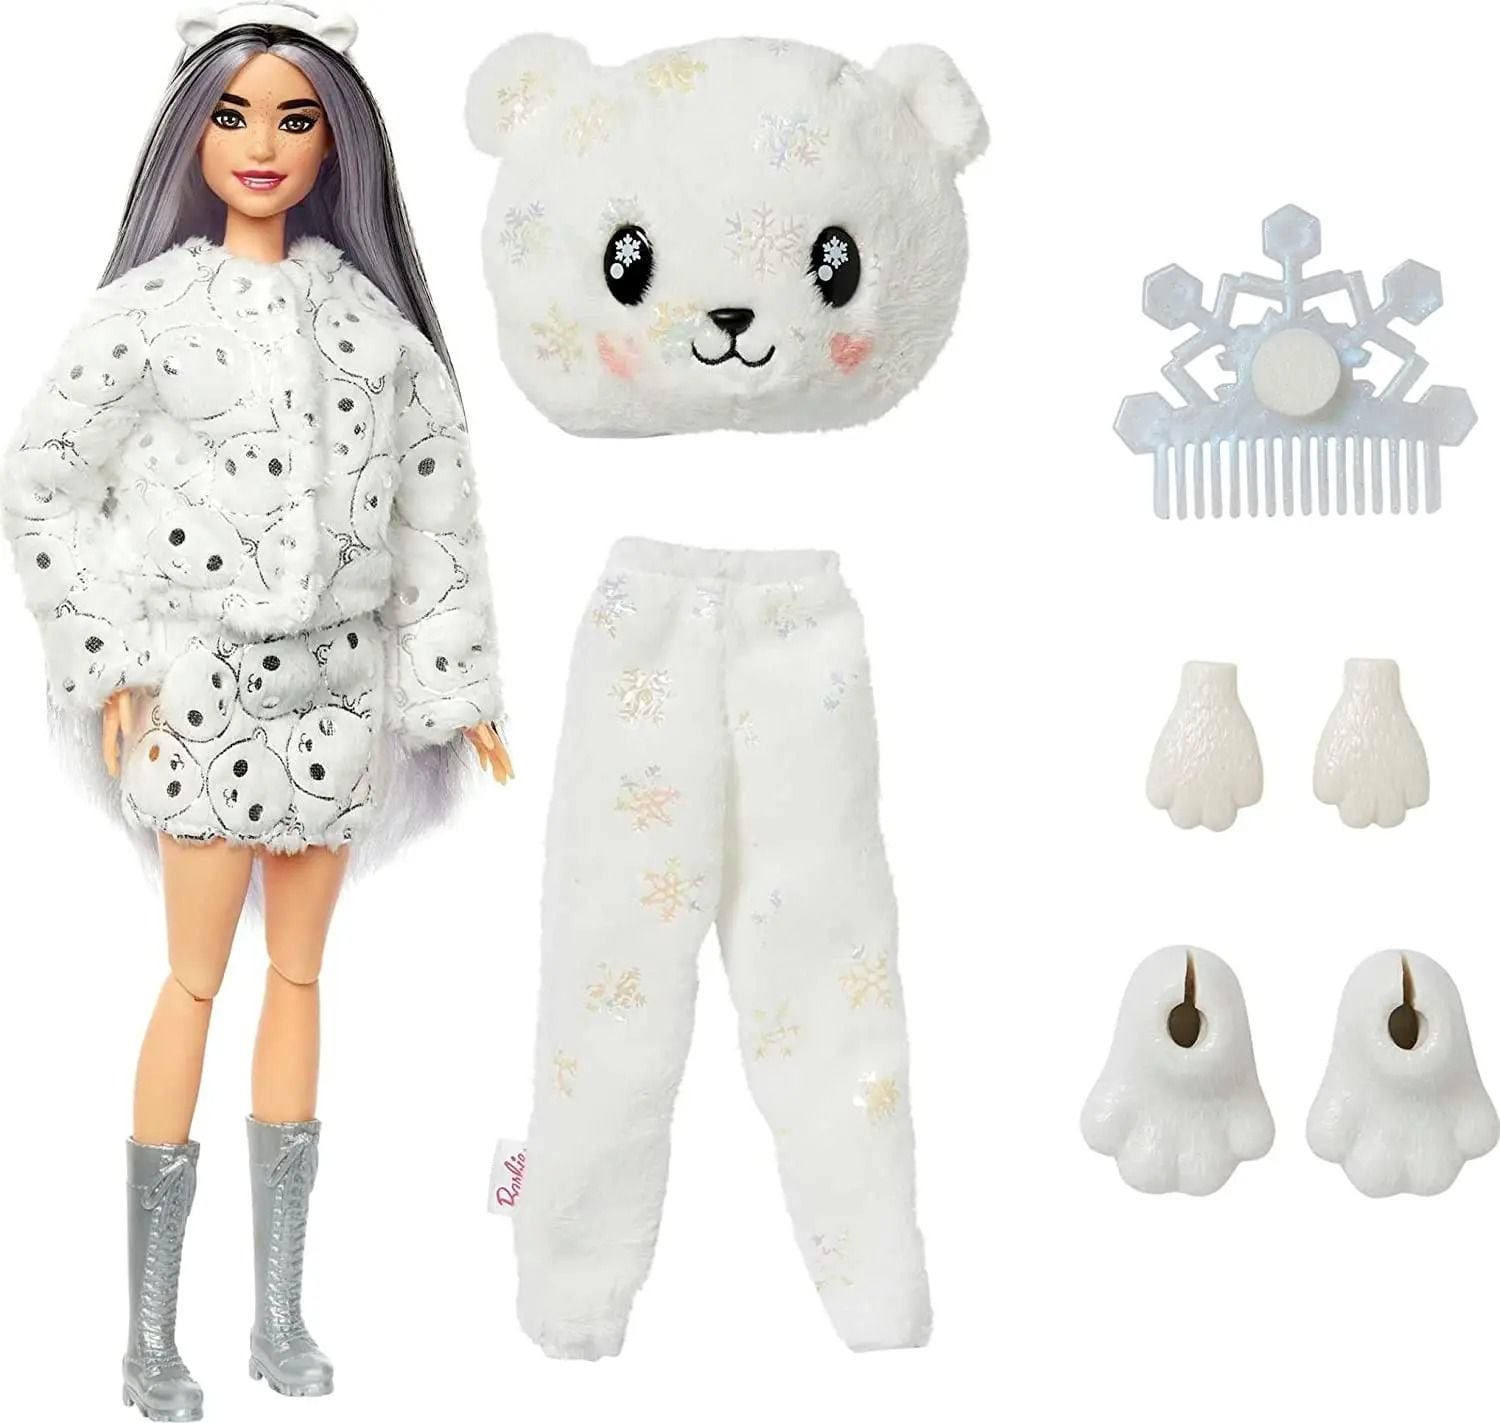 Barbie con pijama de oso polar en AliExpress